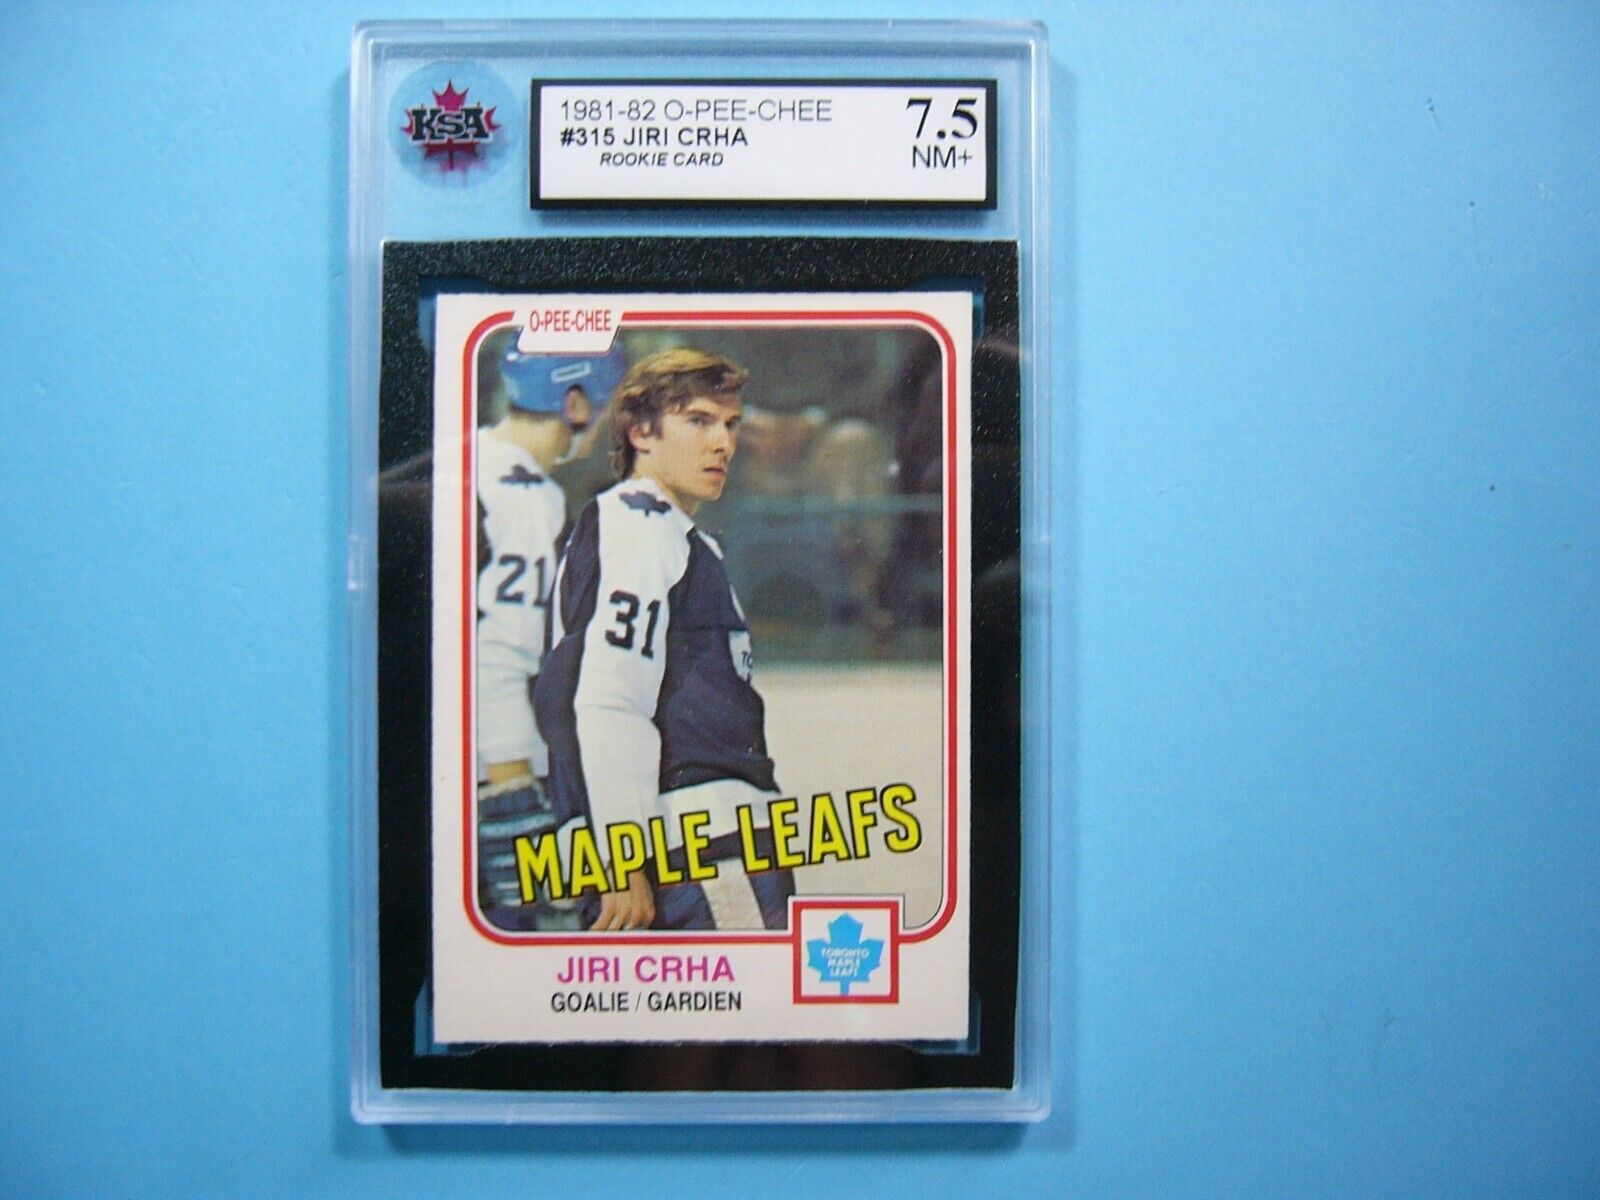 1981/82 O-PEE-CHEE NHL HOCKEY CARD #315 JIRI CRHA ROOKIE RC KSA 7.5 NM+ OPC. rookie card picture